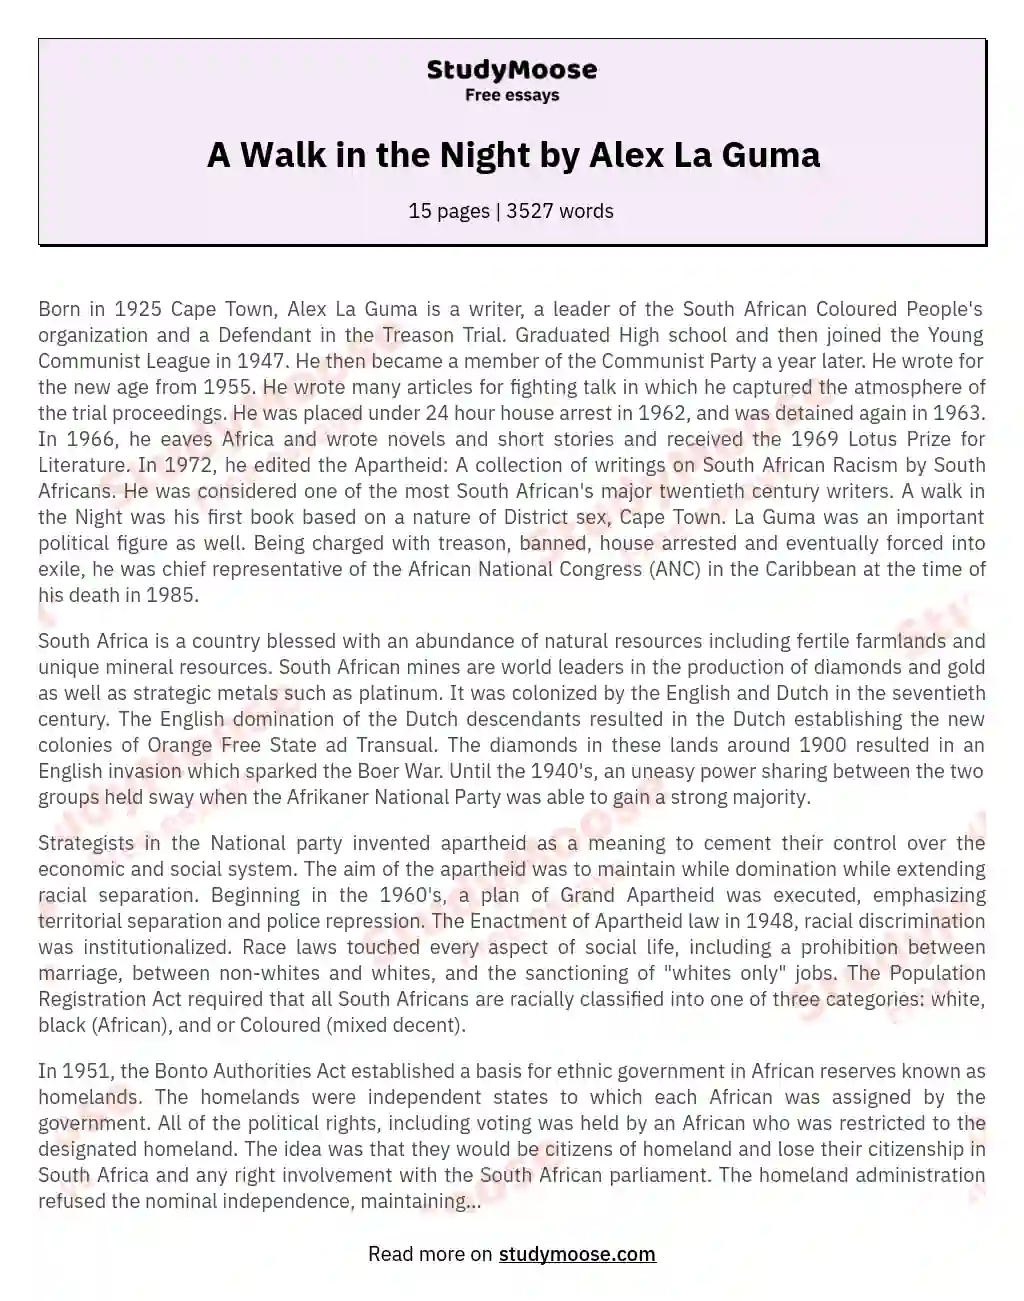 A Walk in the Night by Alex La Guma essay